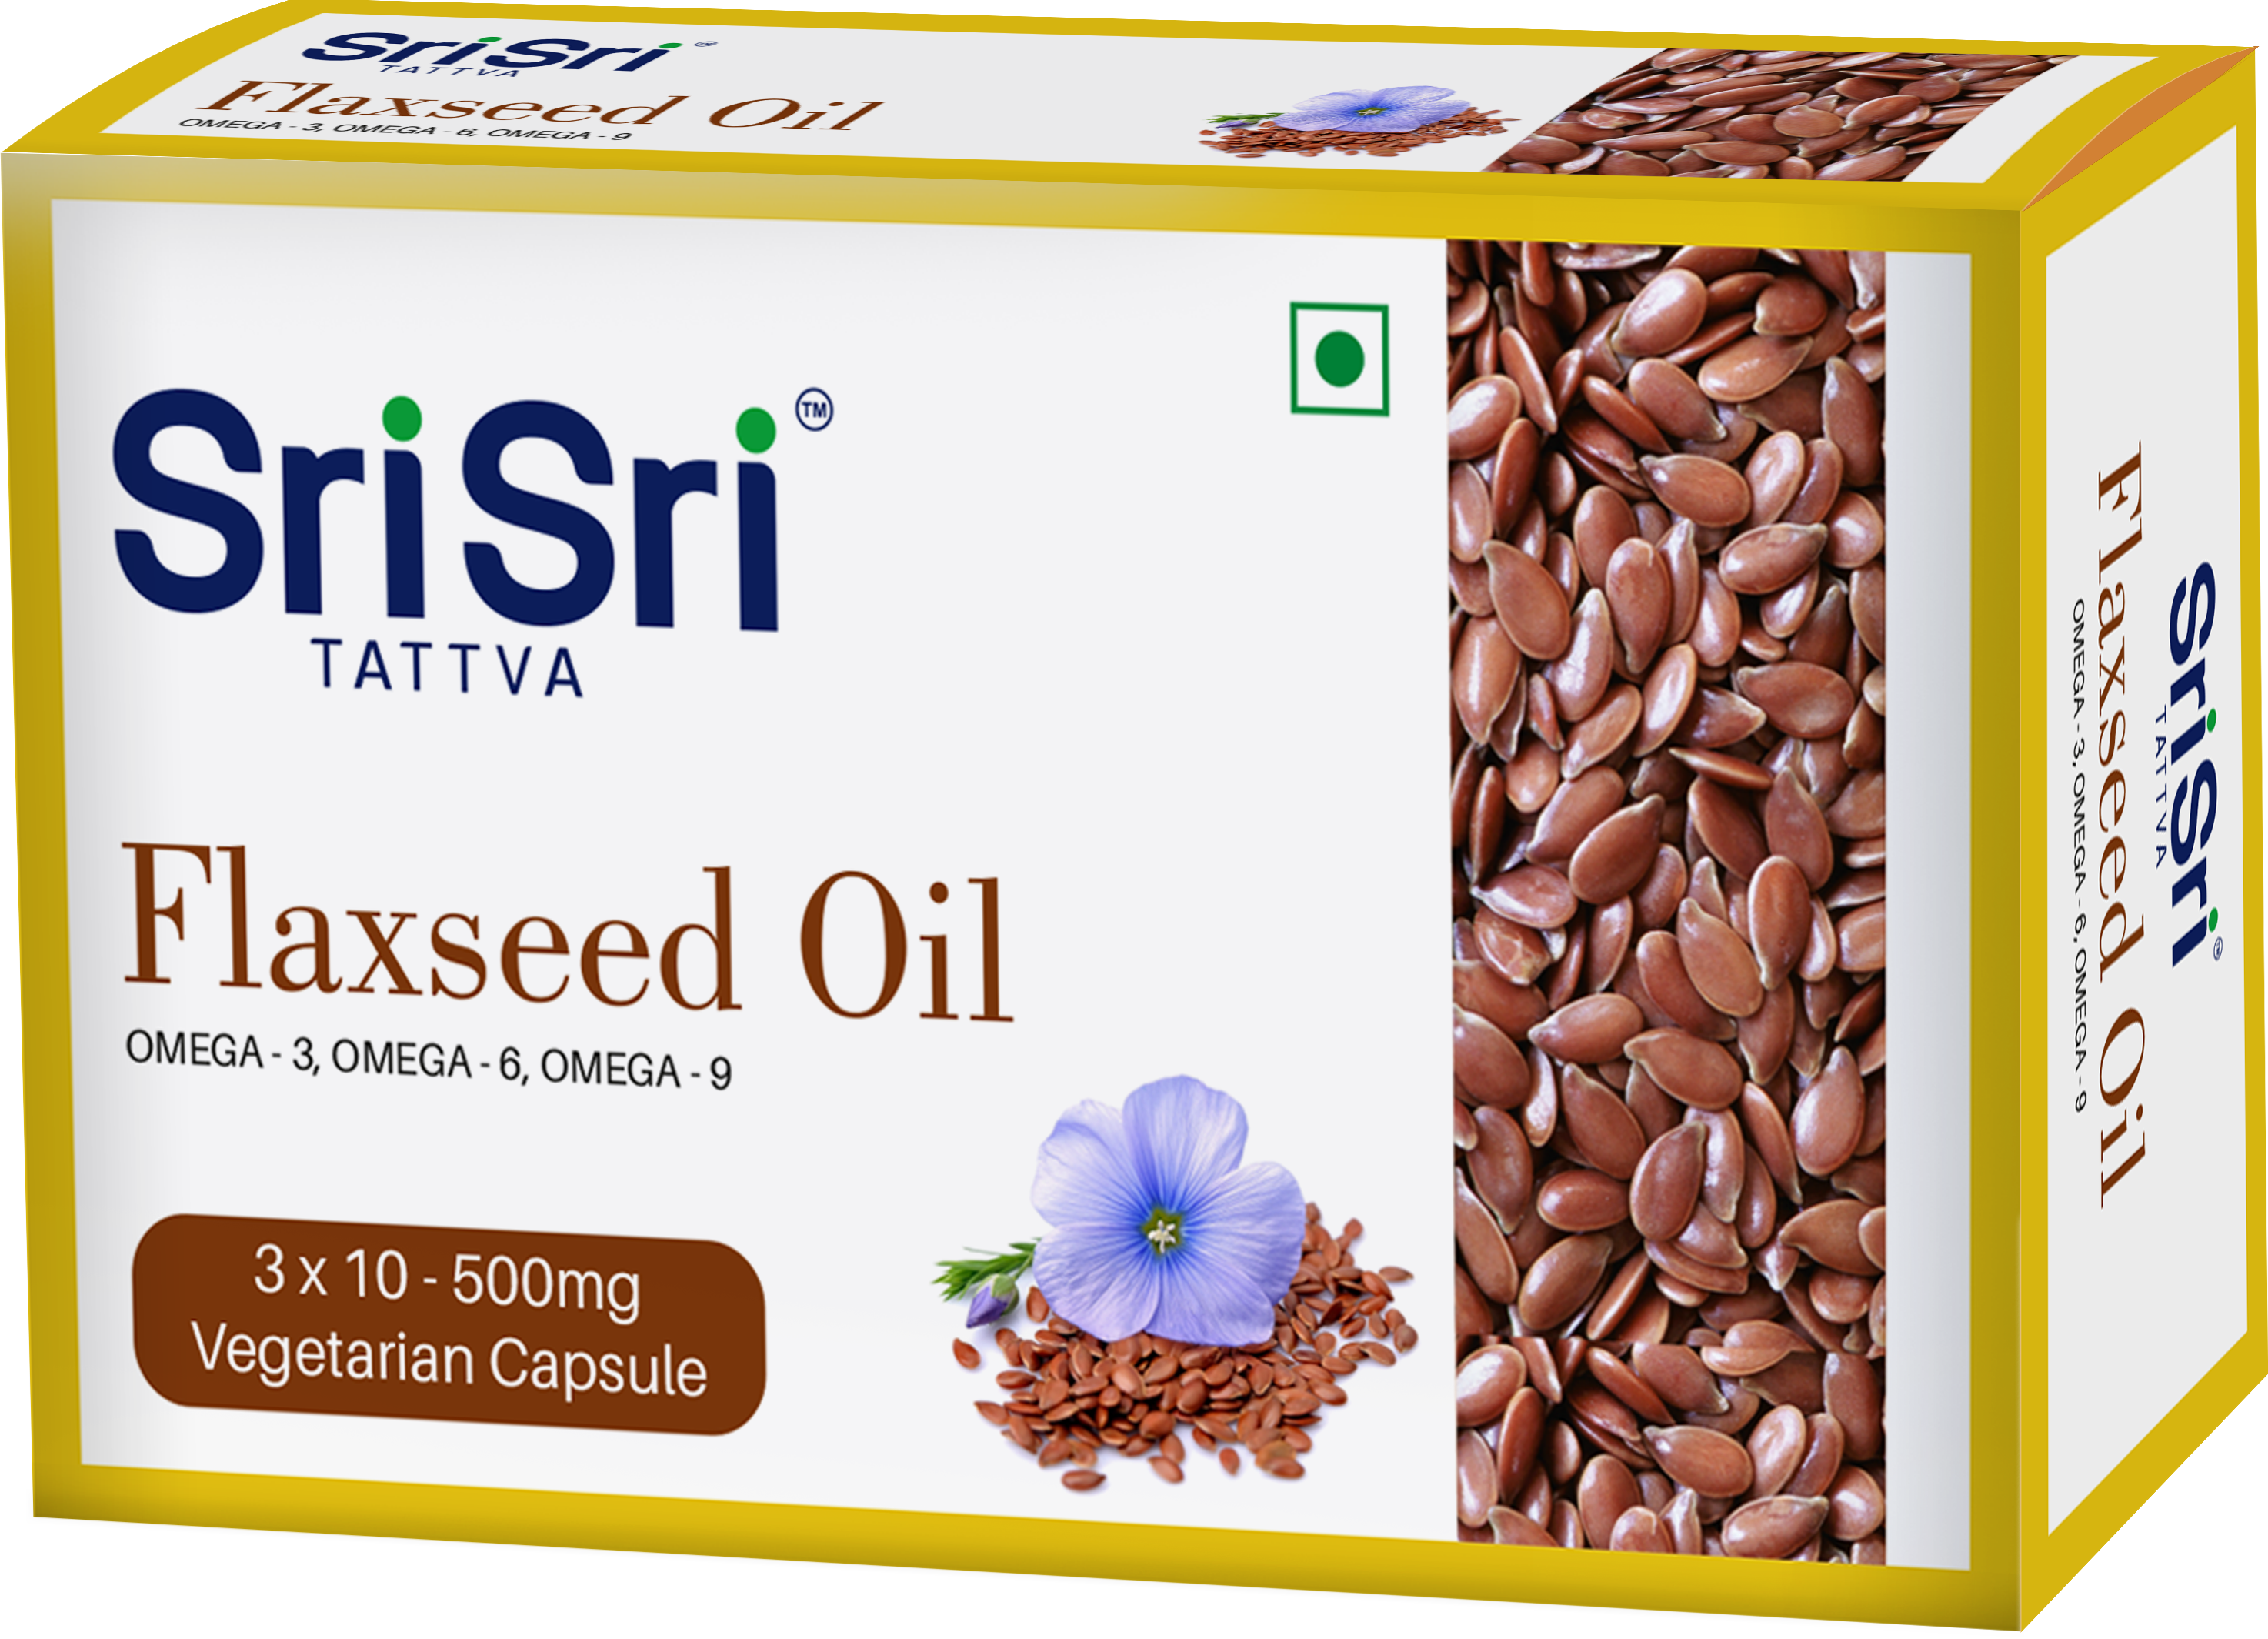 Sri Sri Tattva Flaxseed Oil Veg Capsule